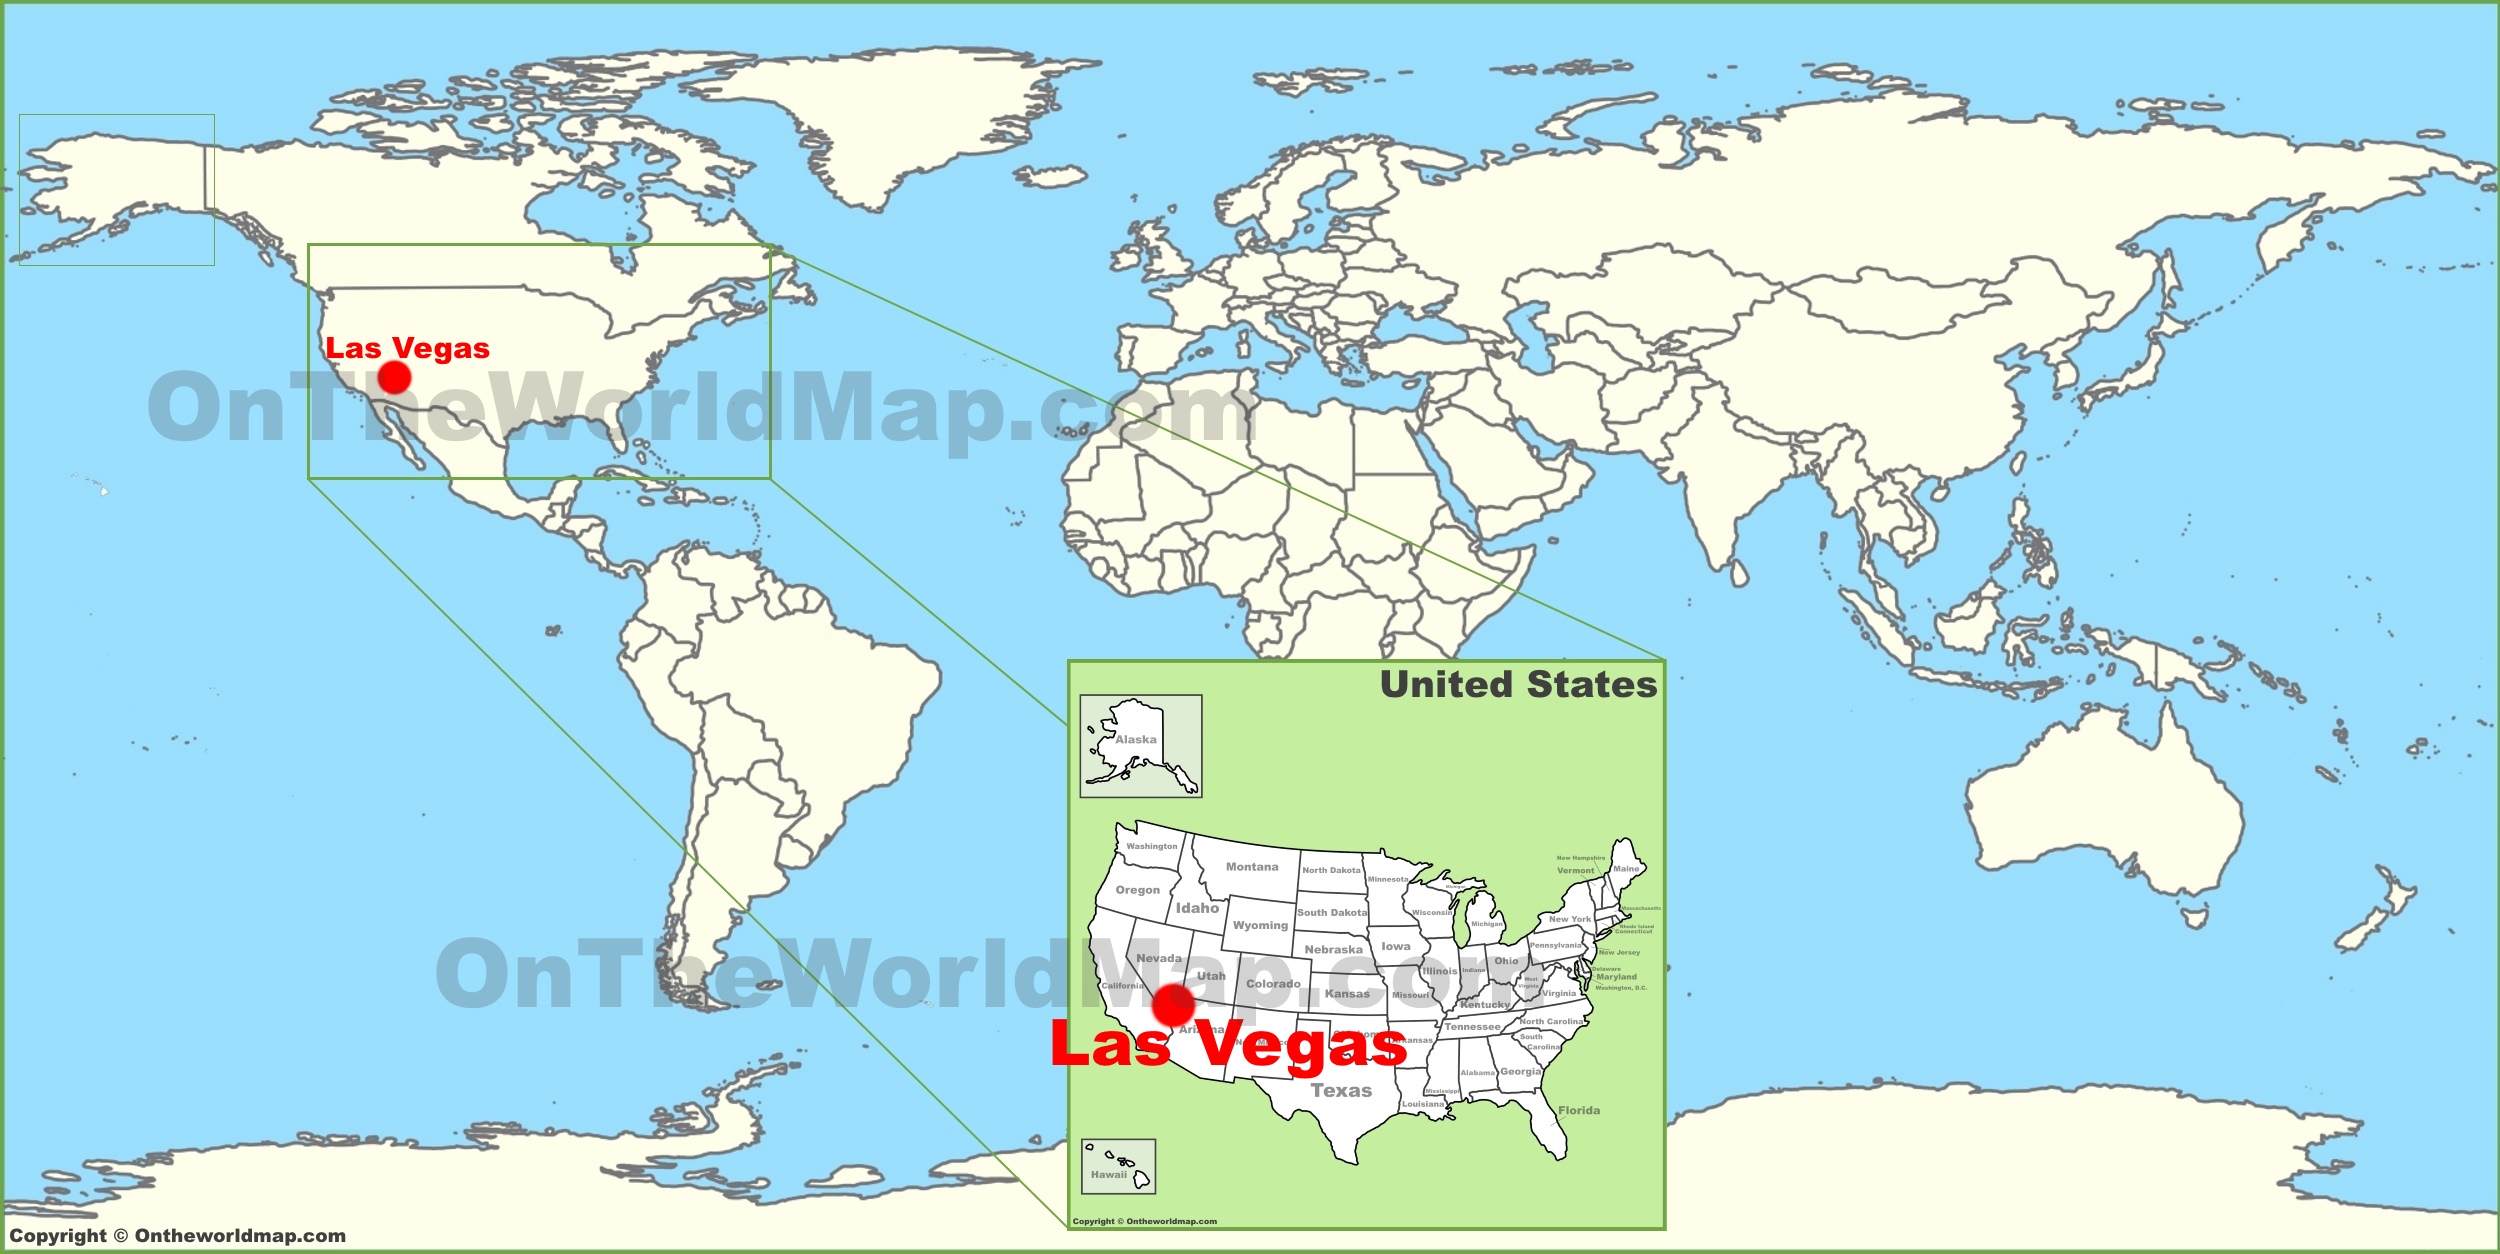 Las Vegas World Map